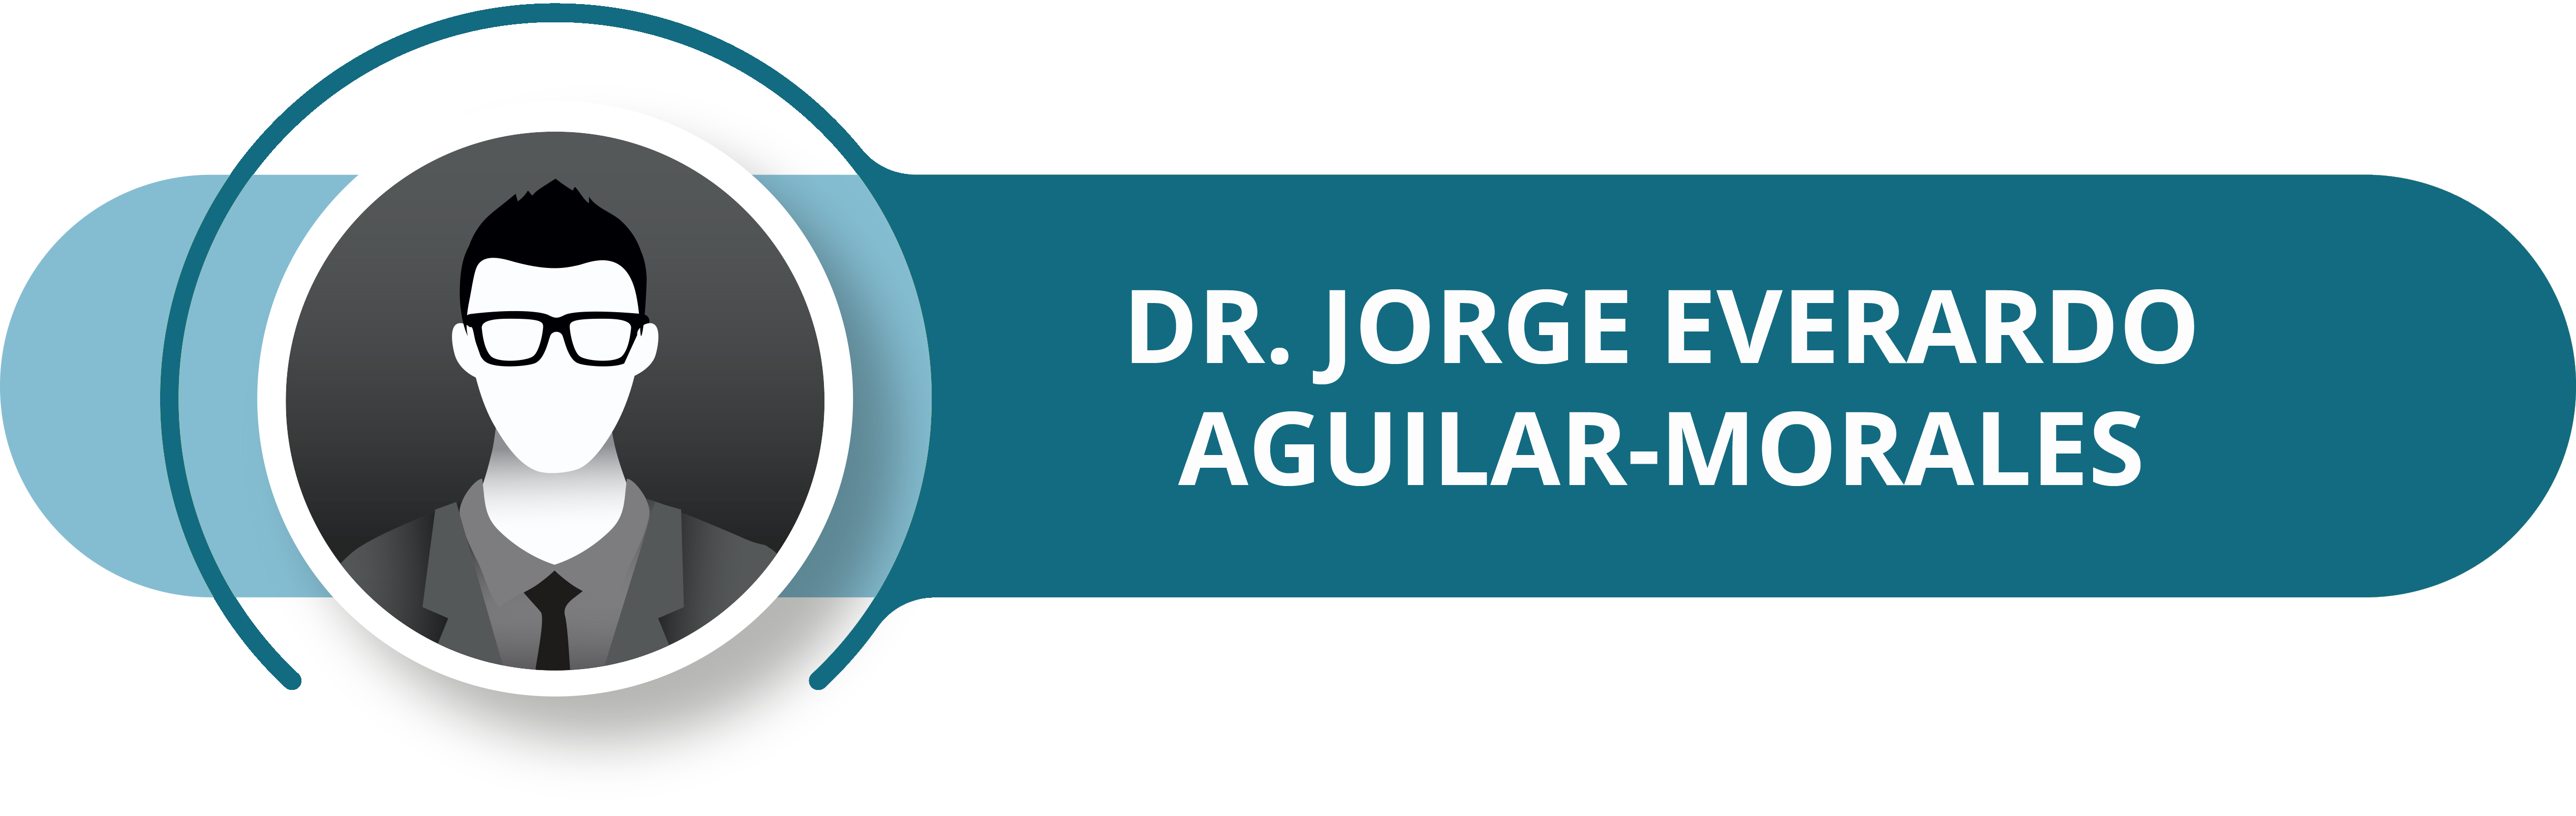 dr_jorge_everardo_aguilar_morales.png